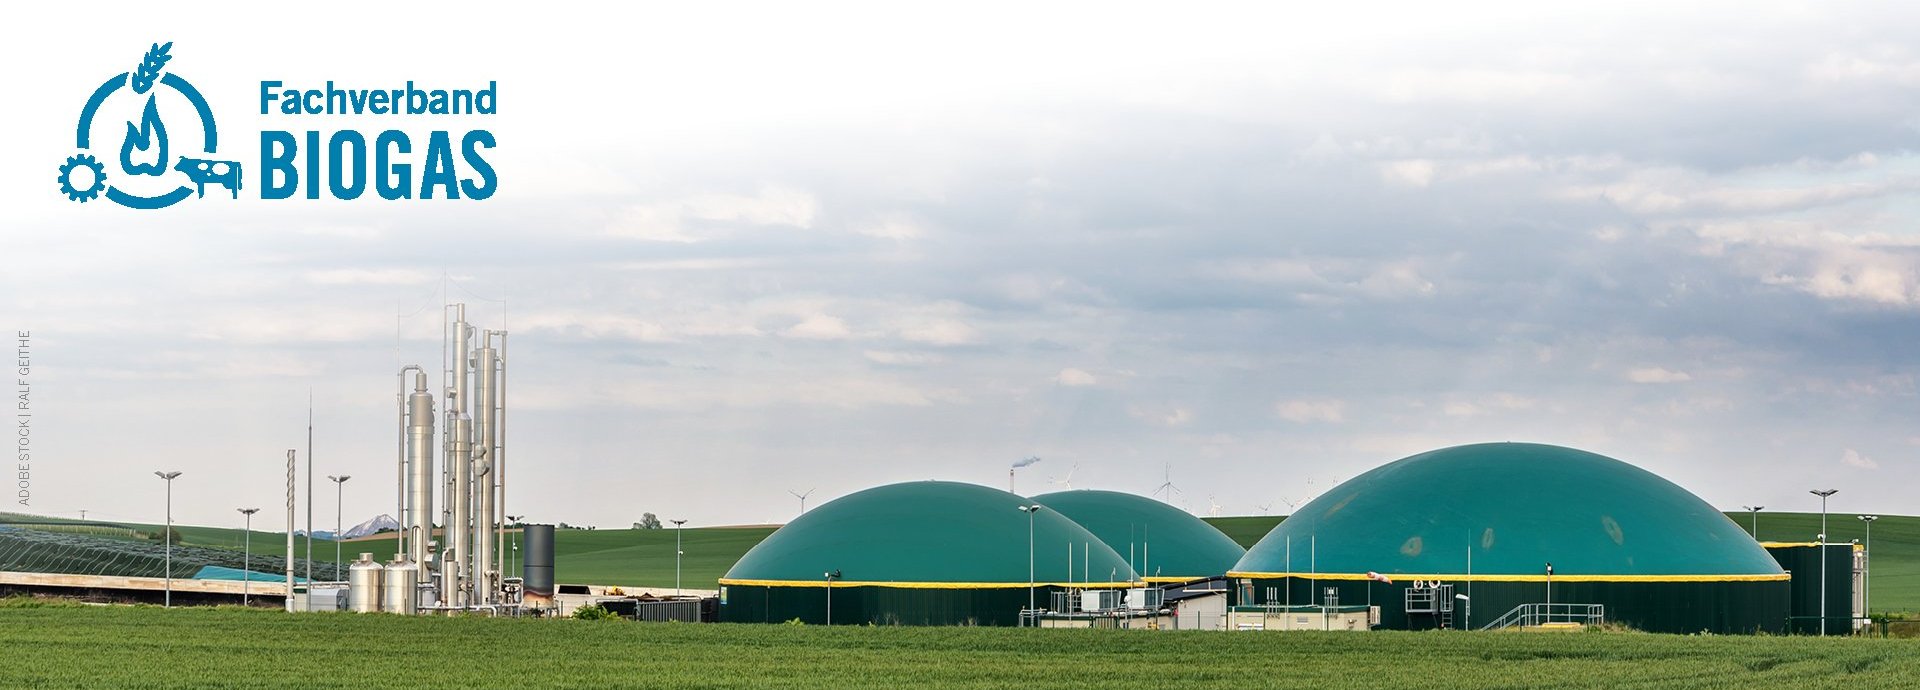 Fachverband Biogas Banner